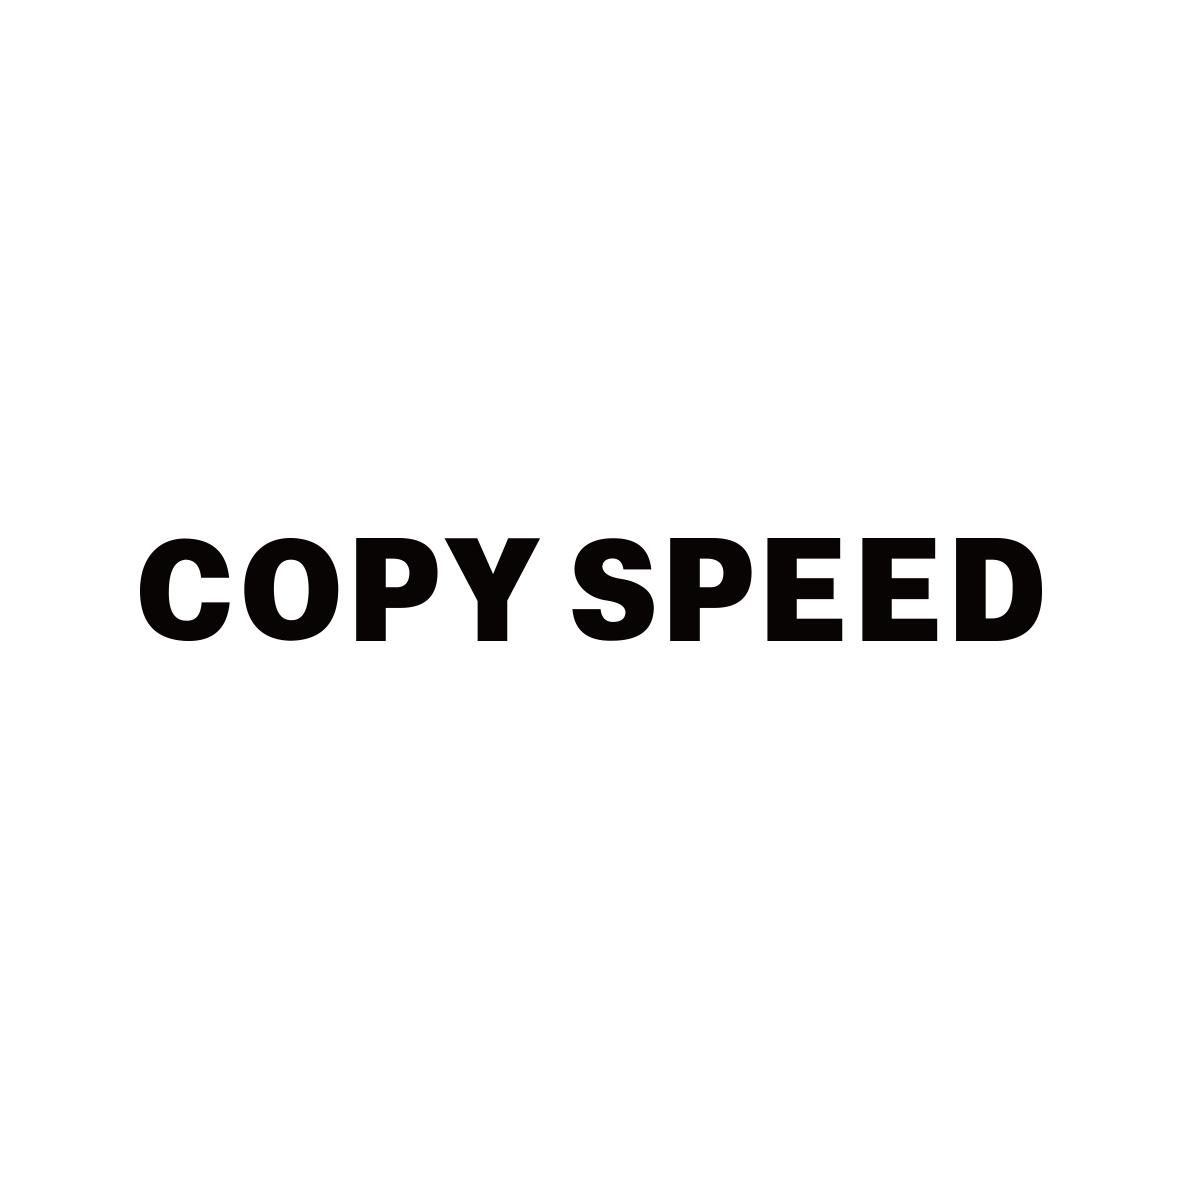 COPY SPEED胶版纸商标转让费用买卖交易流程